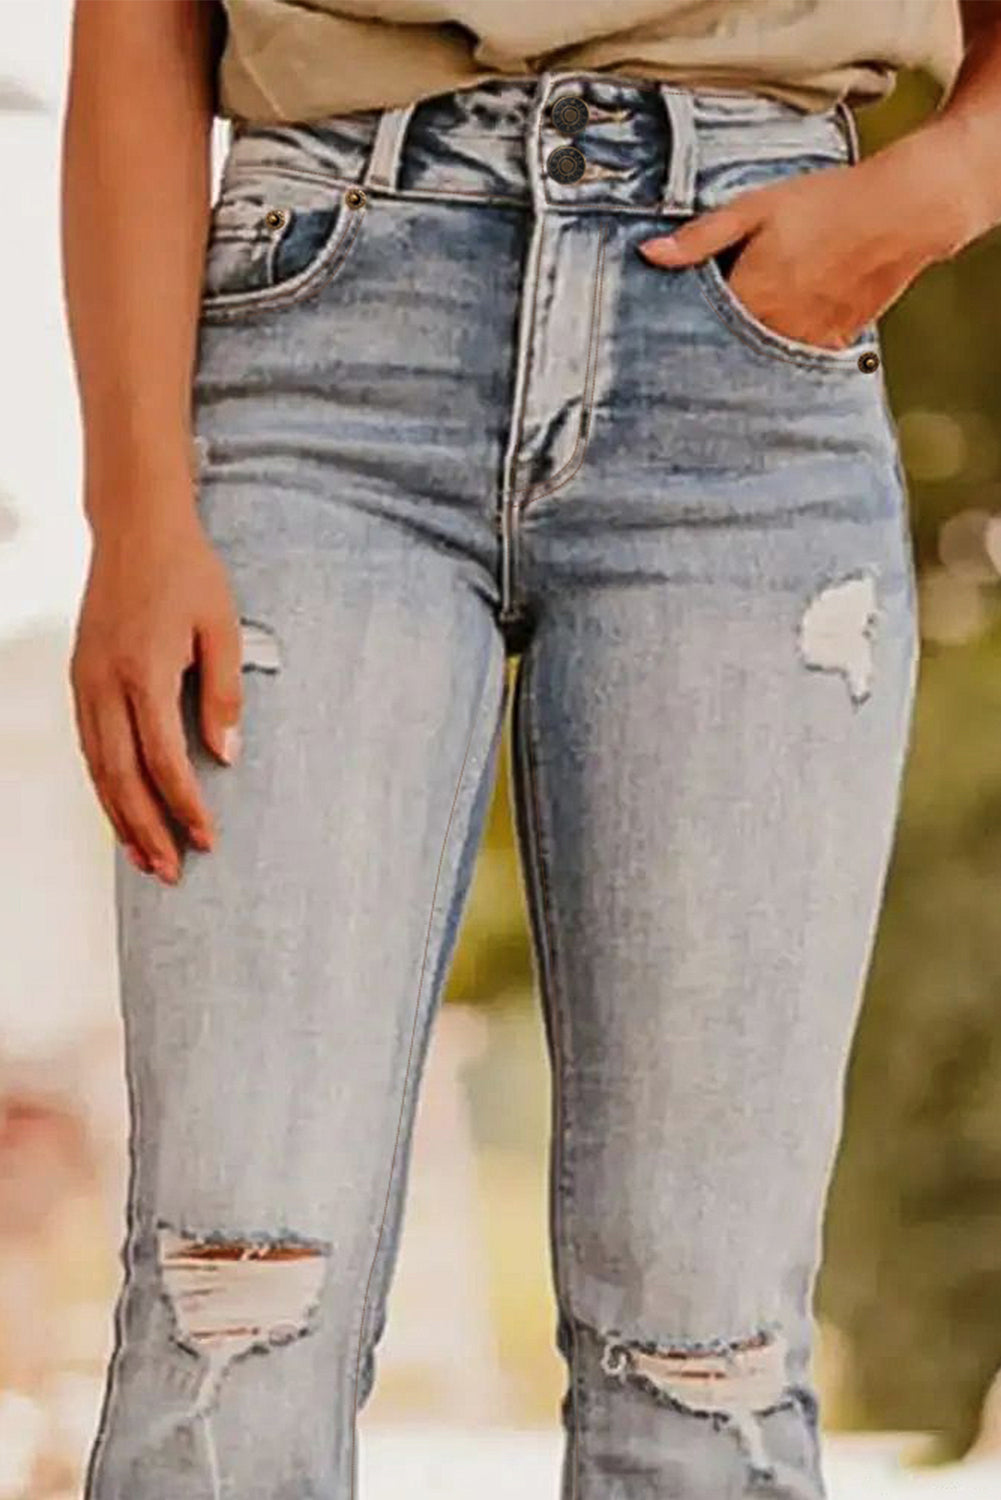 Dunkelblaue Vintage-Jeans in heller Waschung mit zerrissenen, rohen Kanten